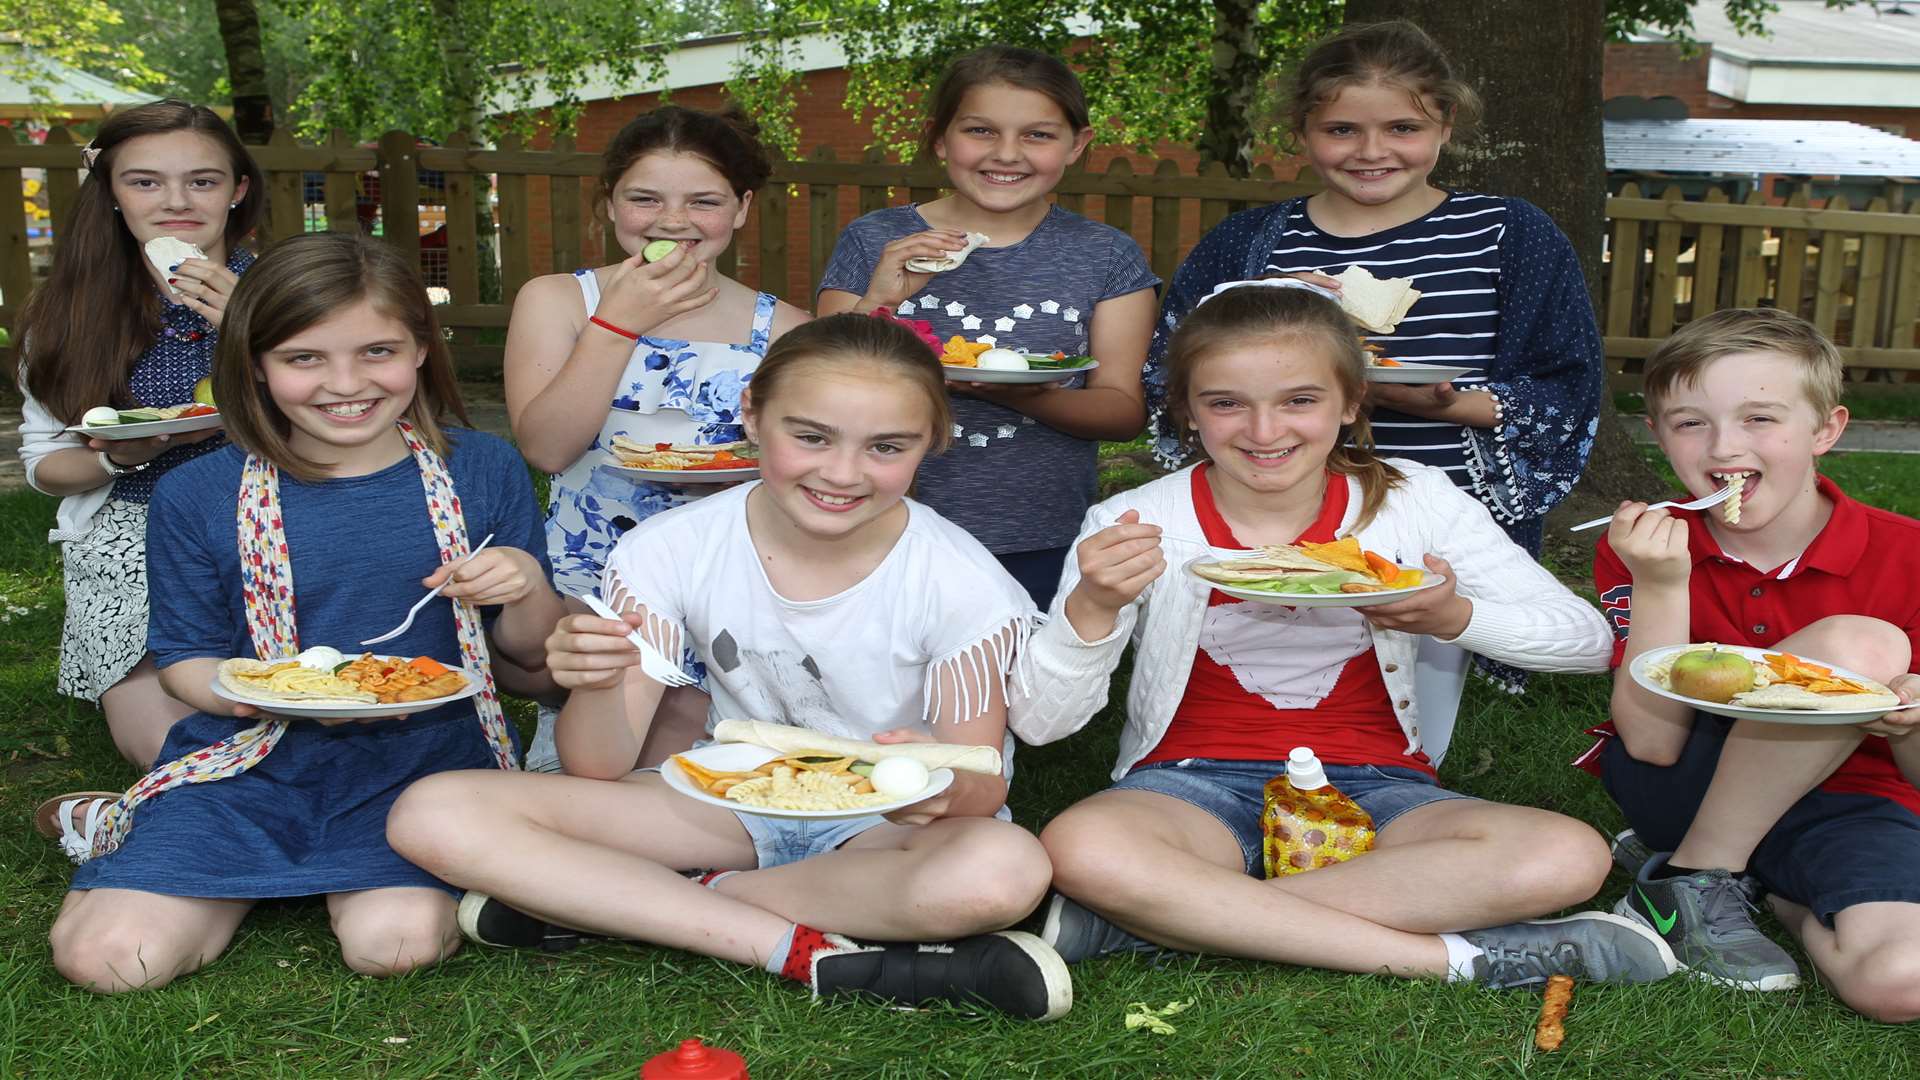 Year 6 pupils at Wateringbury Primary School enjoy the picnic. Picture: John Westhrop